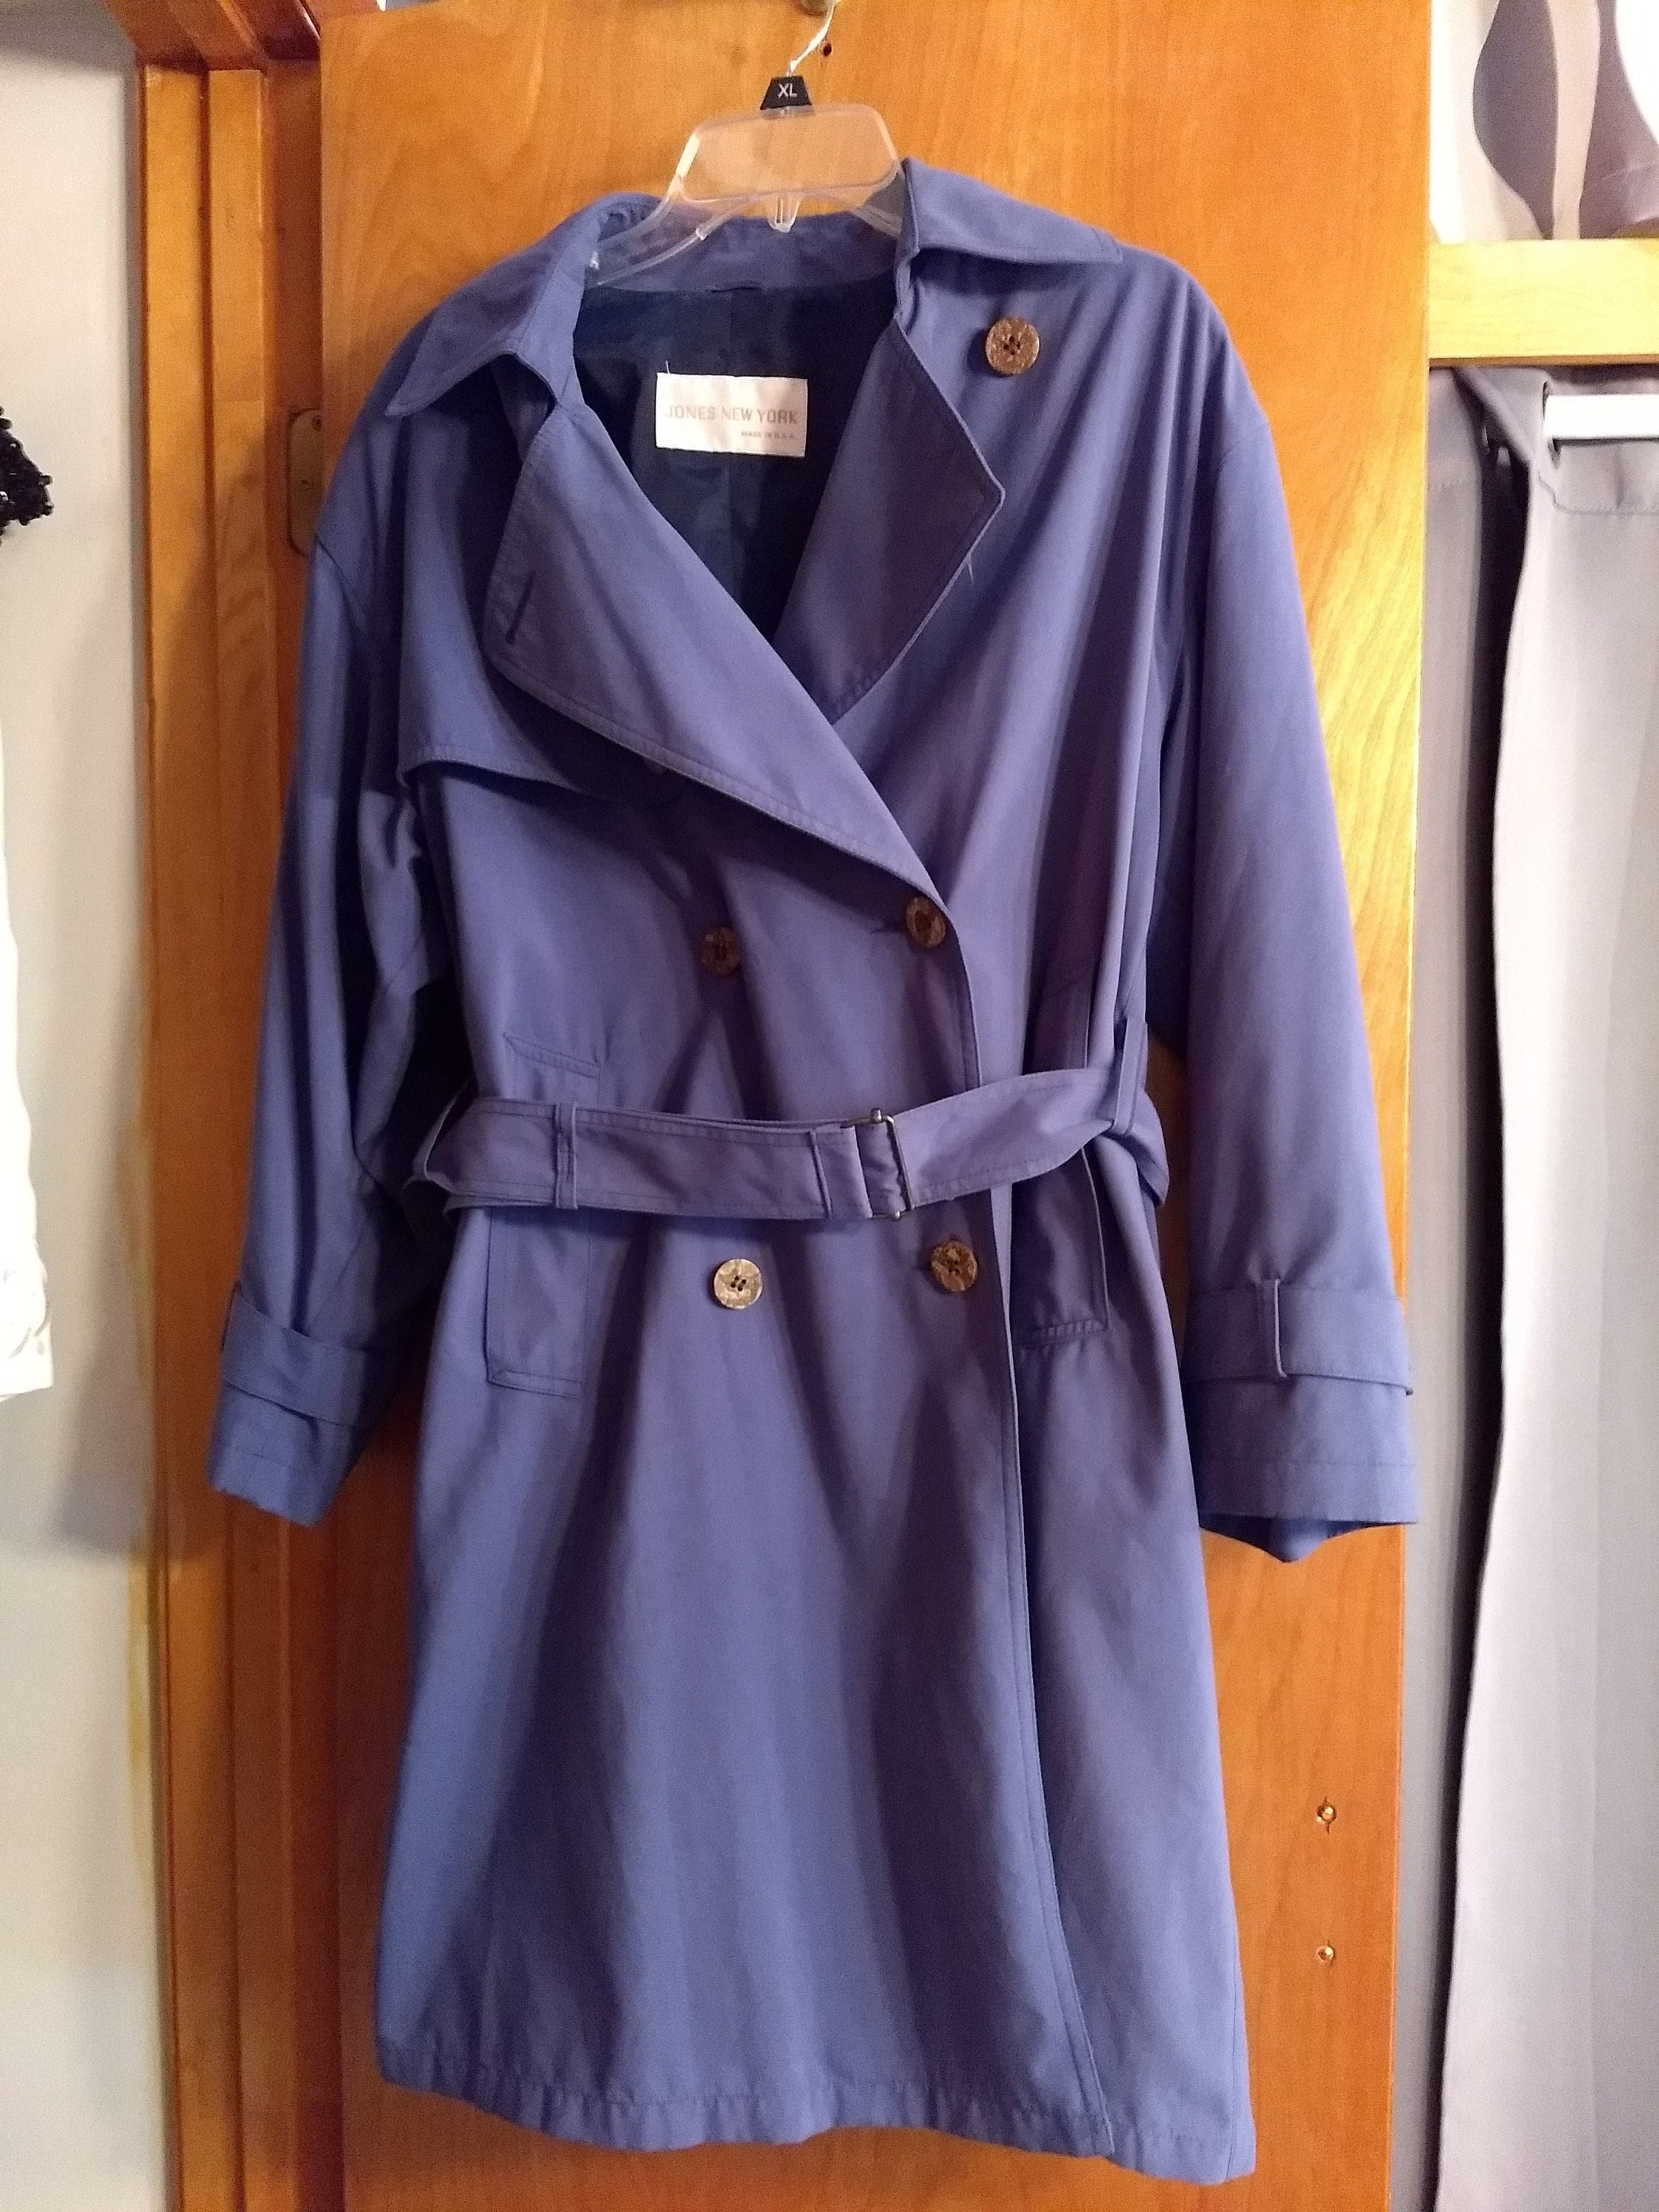 Warm Wool Coat / Autumn Blue Coat / Fall Soft Wool Coat // Annie